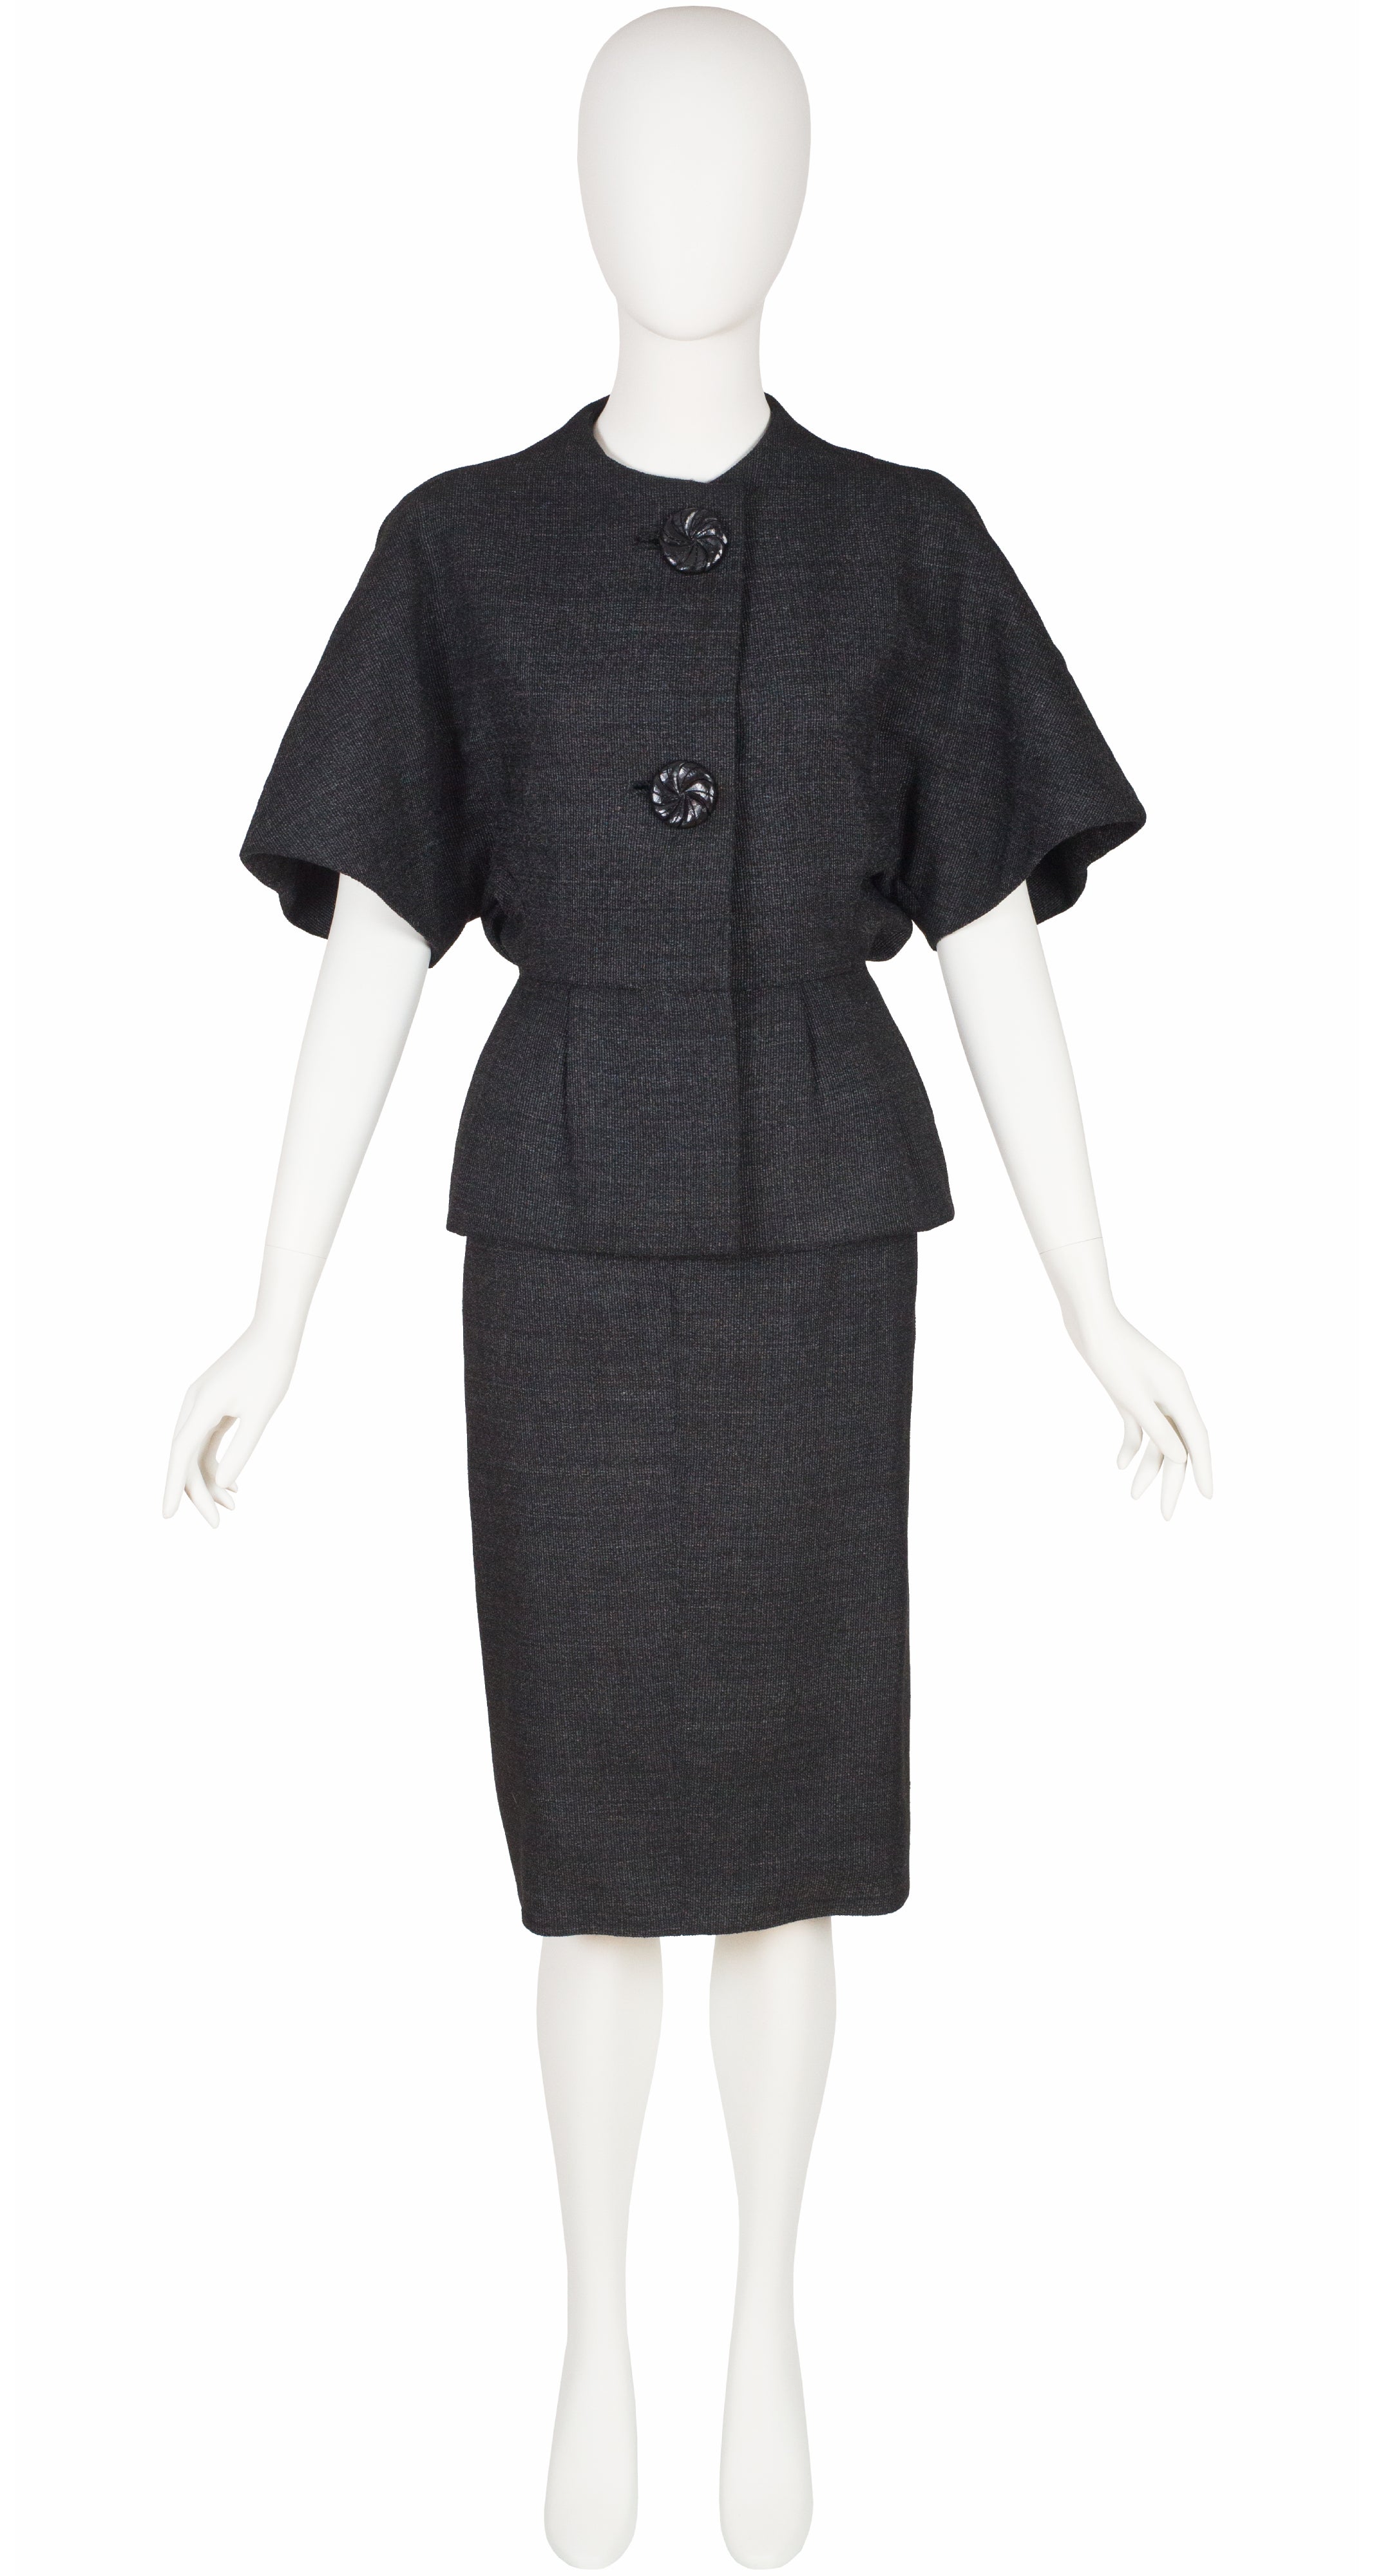 Skirt peplum suit | Womens skirt suits, Clothes for women, Corporate attire